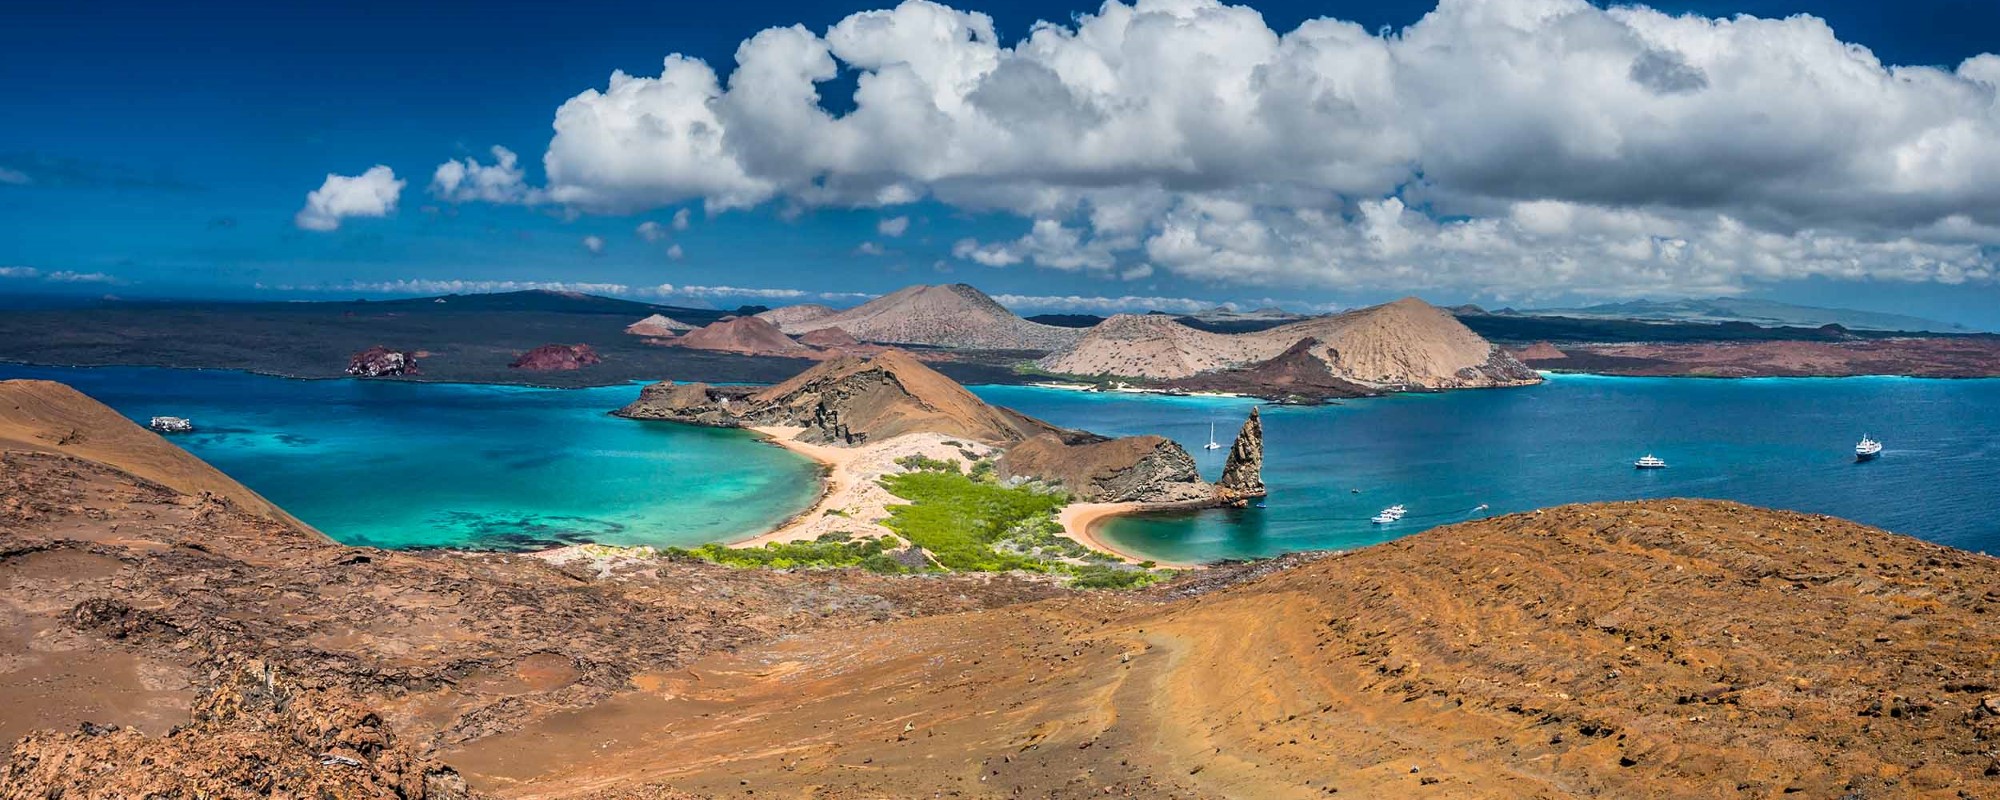 South America Cruise | Ecuador, Galápagos Islands & Peru ...